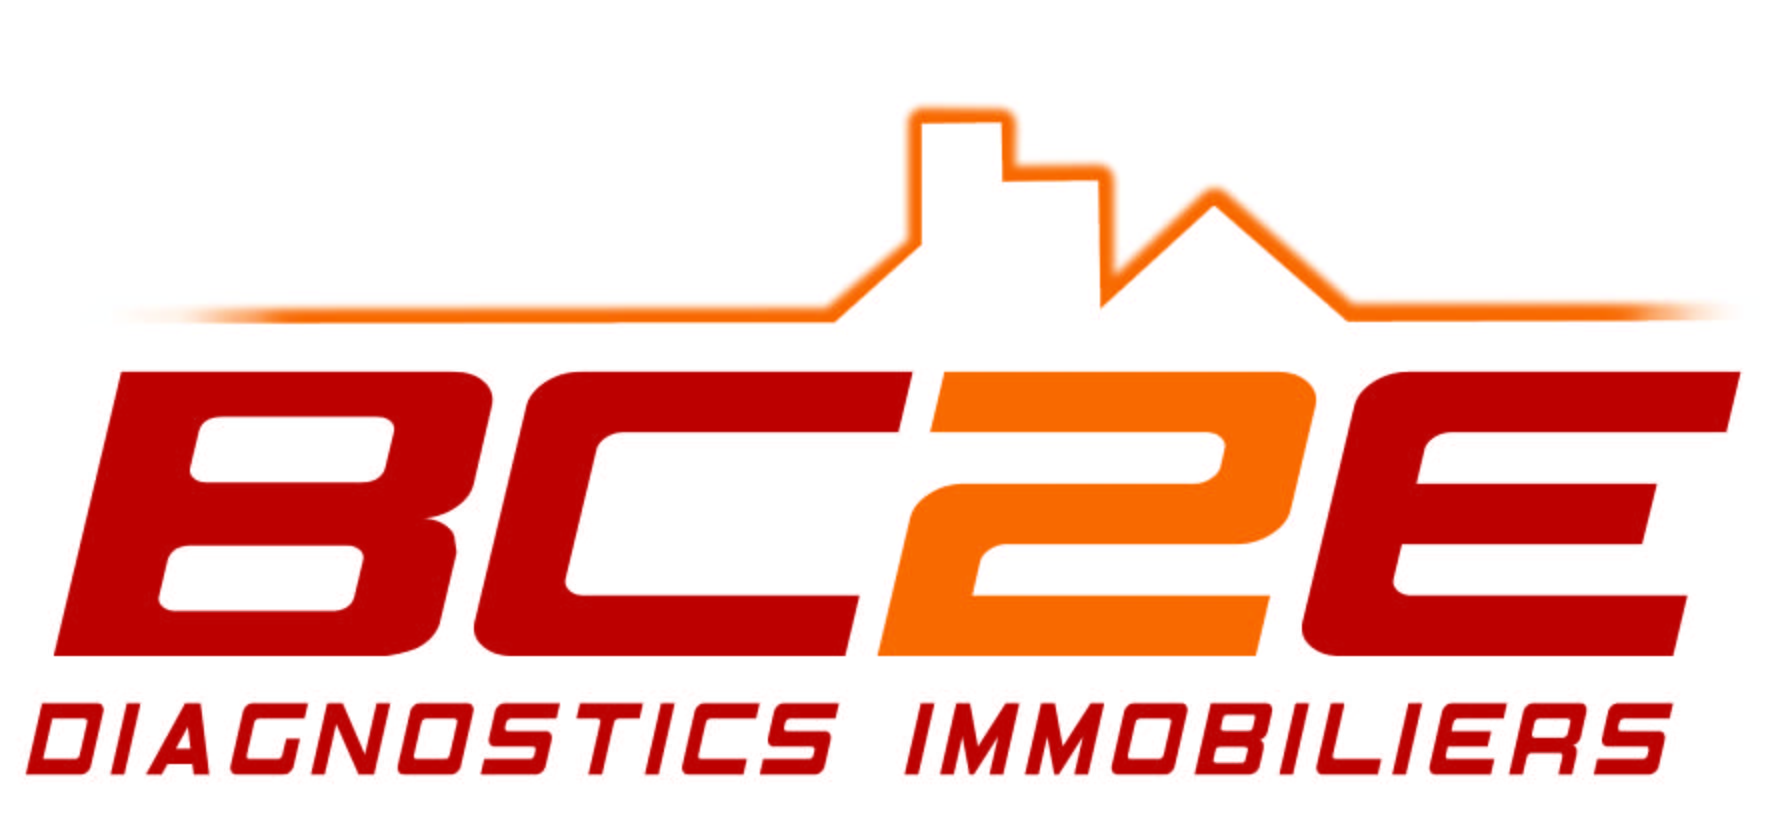 BC2E - Diagnostics Immobiliers